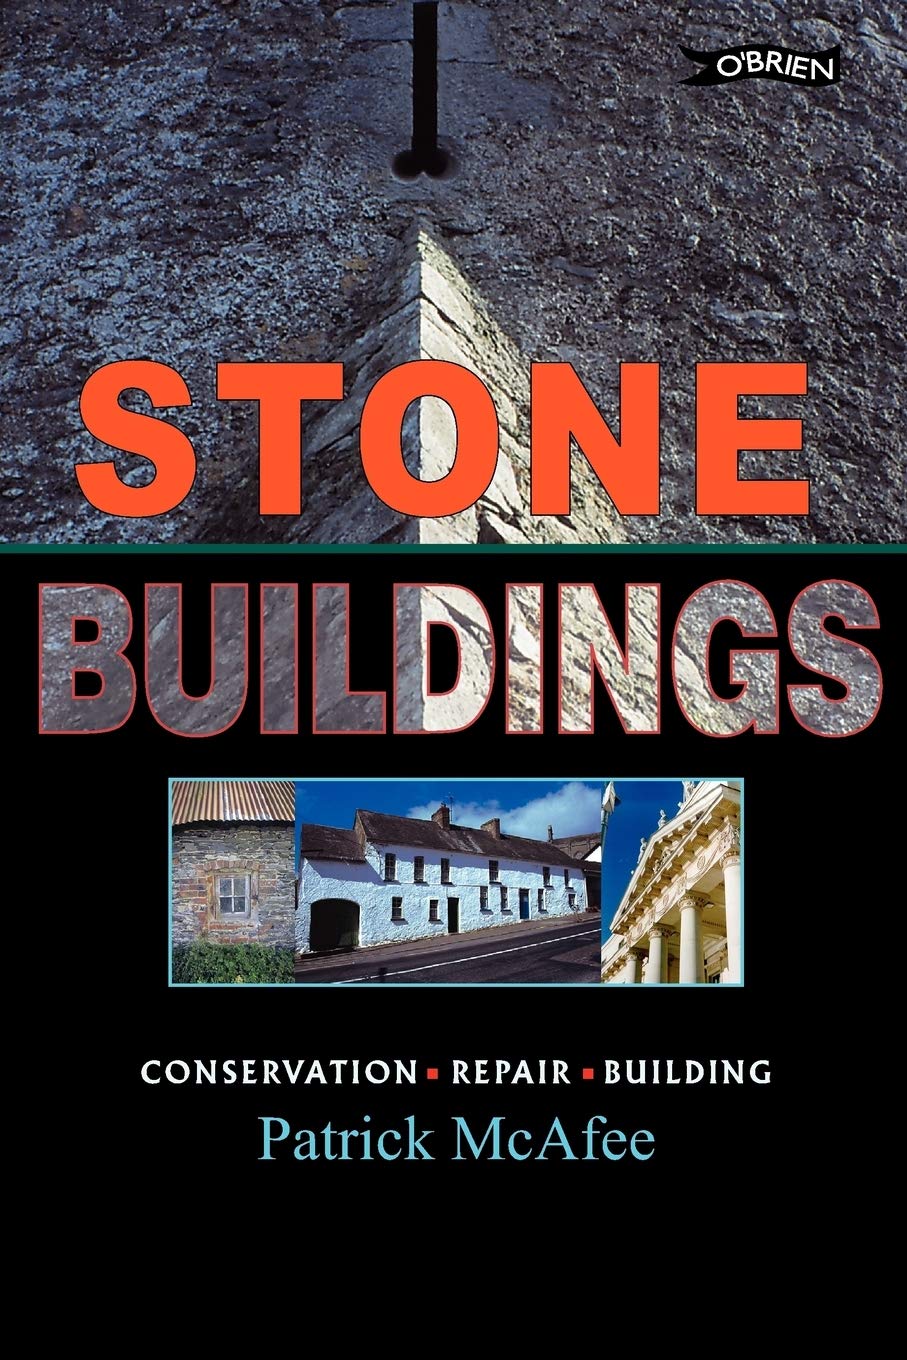 Stone Buildings